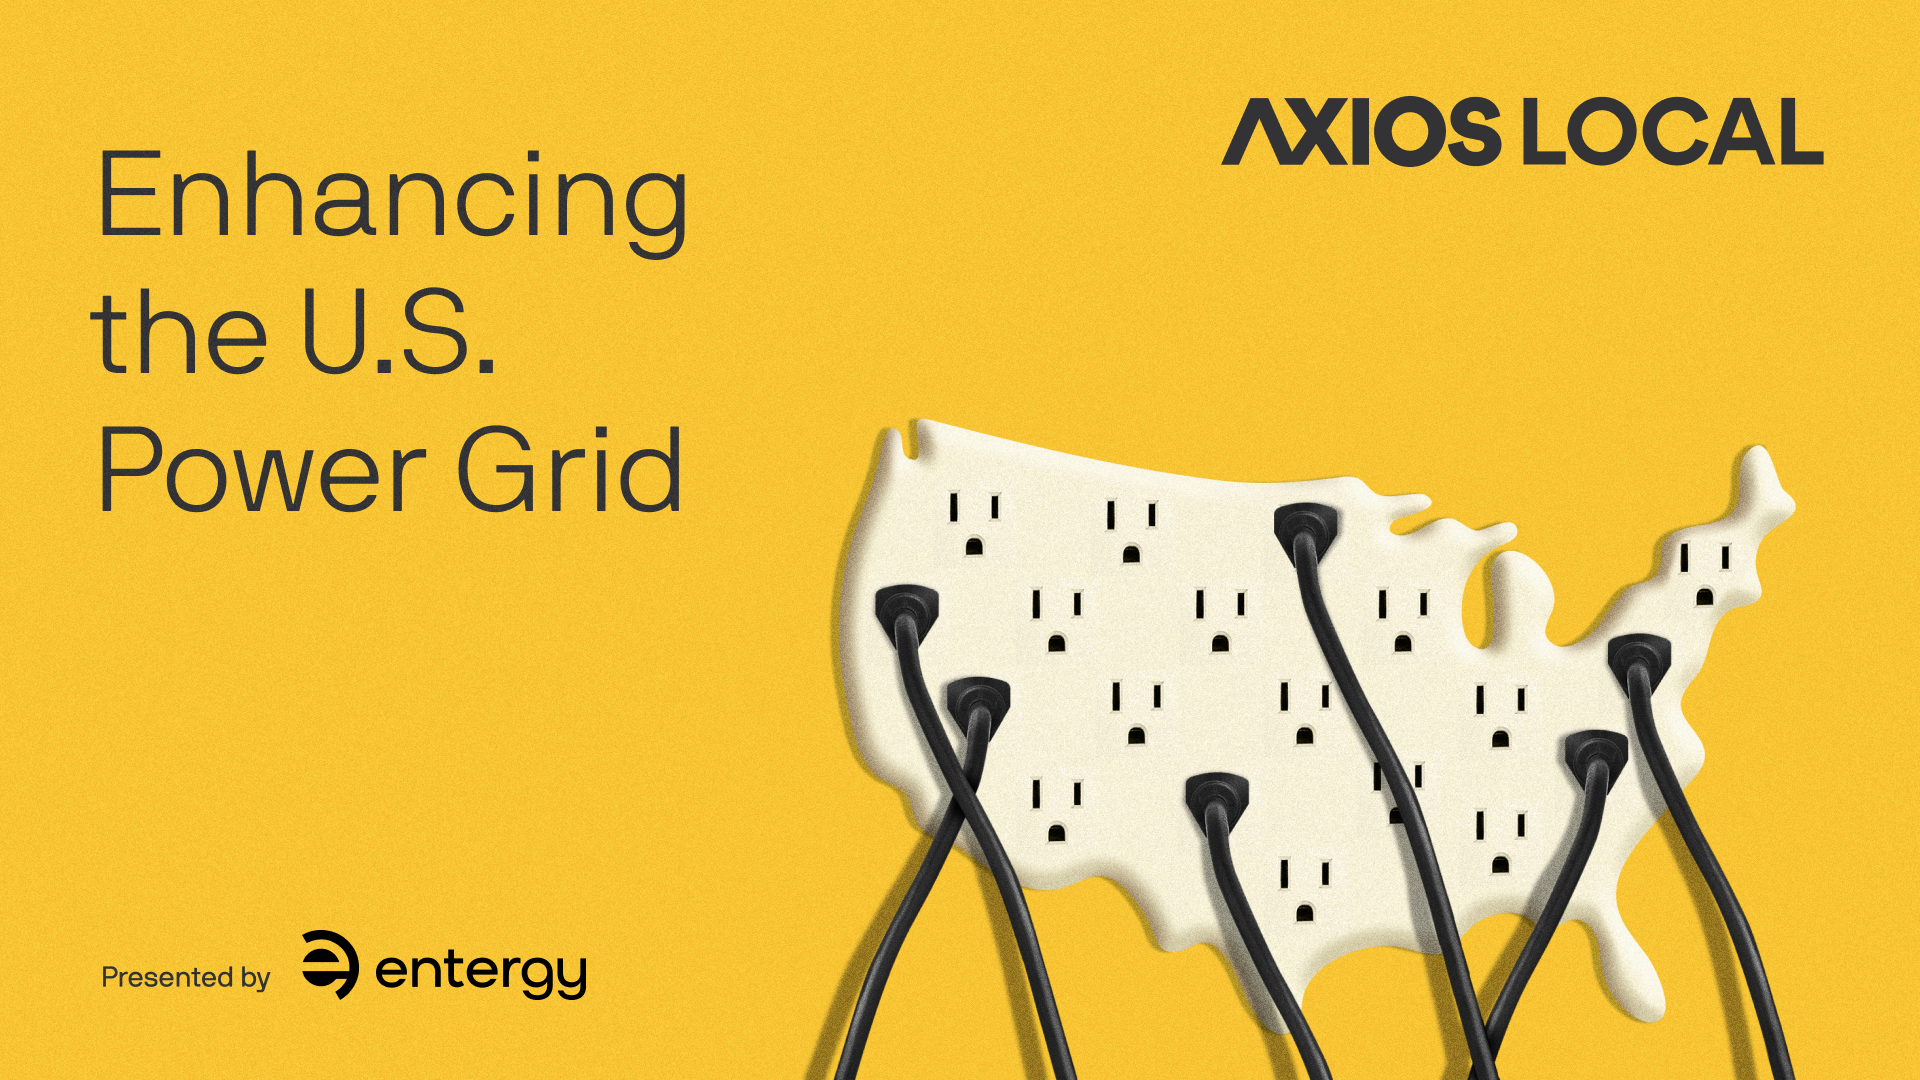 Axios' Enhancing the U.S. Power Grid